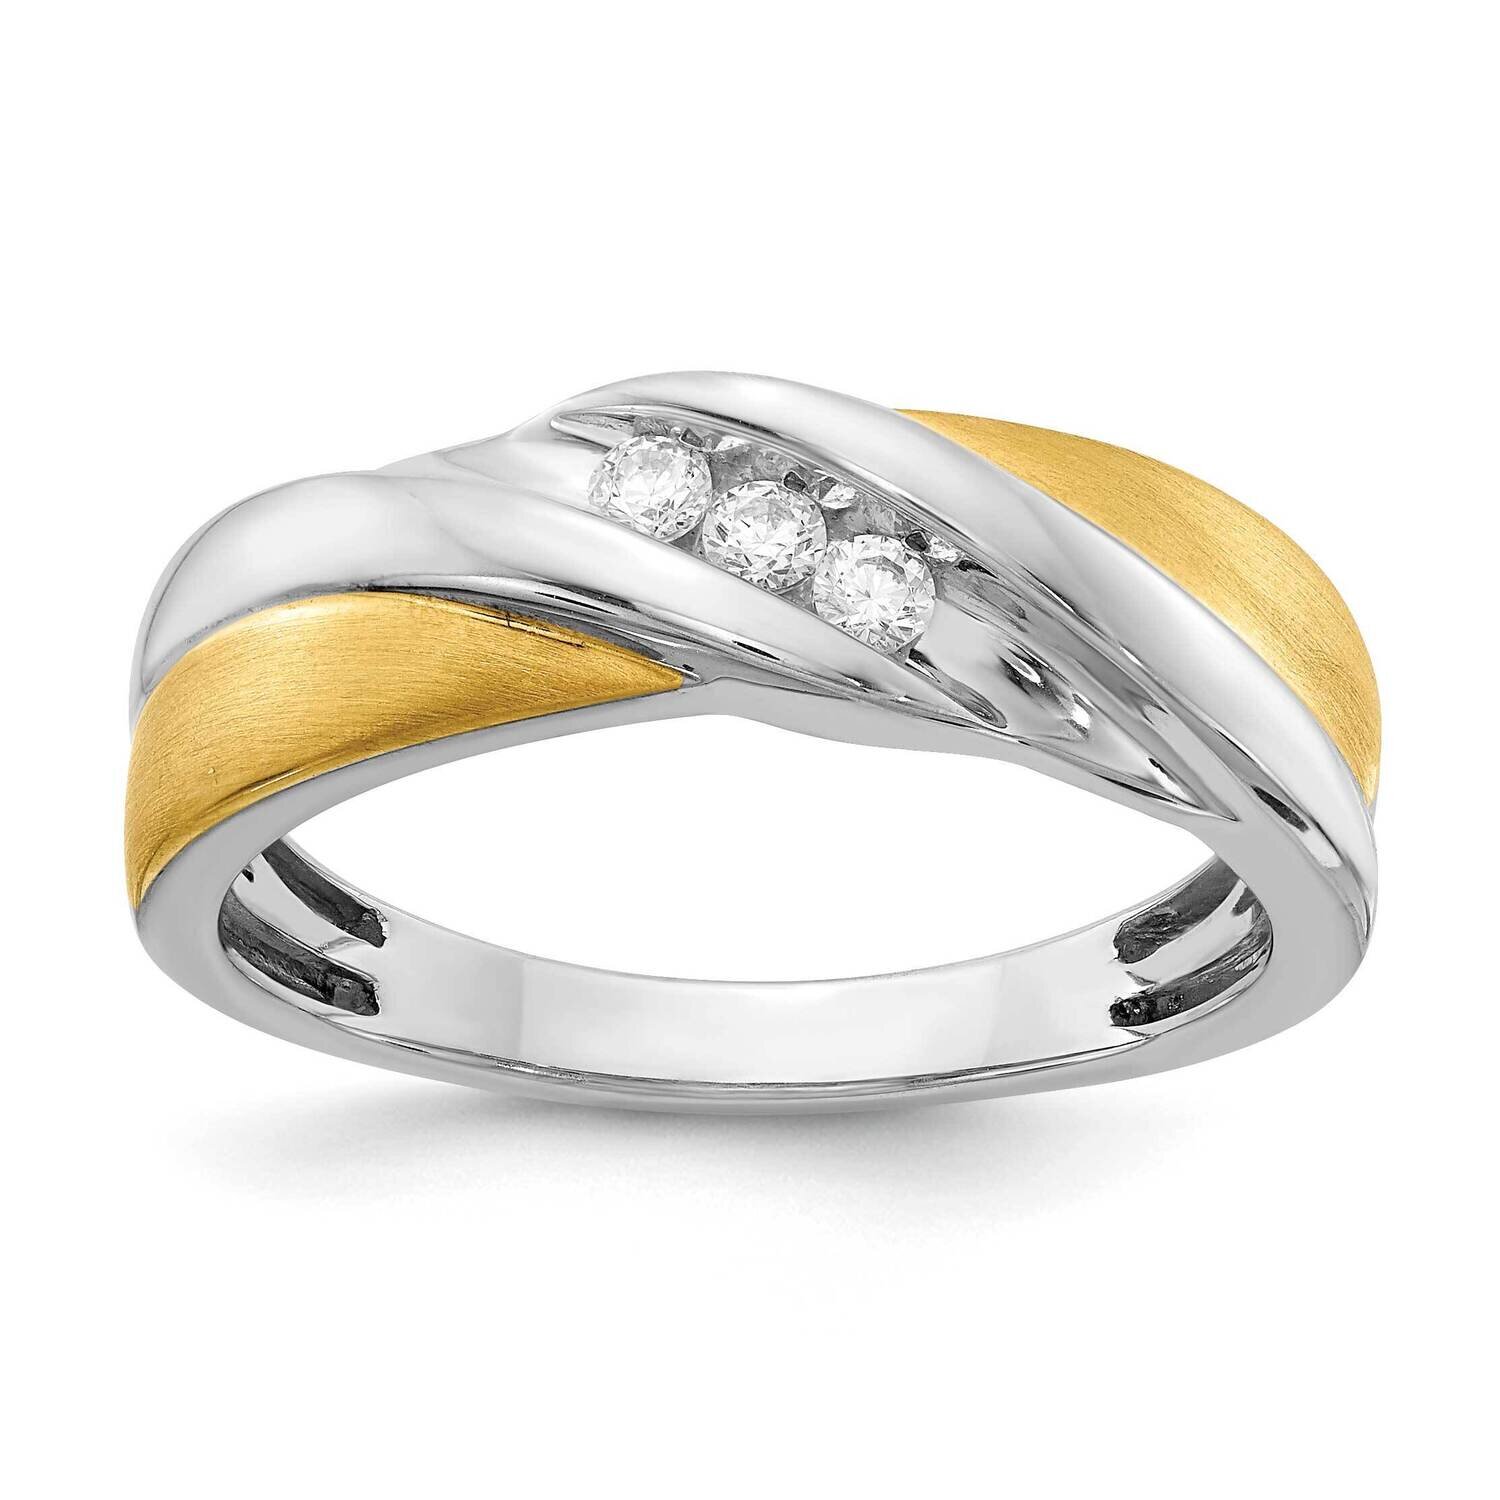 Diamond Men's Ring 14k White & Yellow Gold RM3673B-016-WYAA